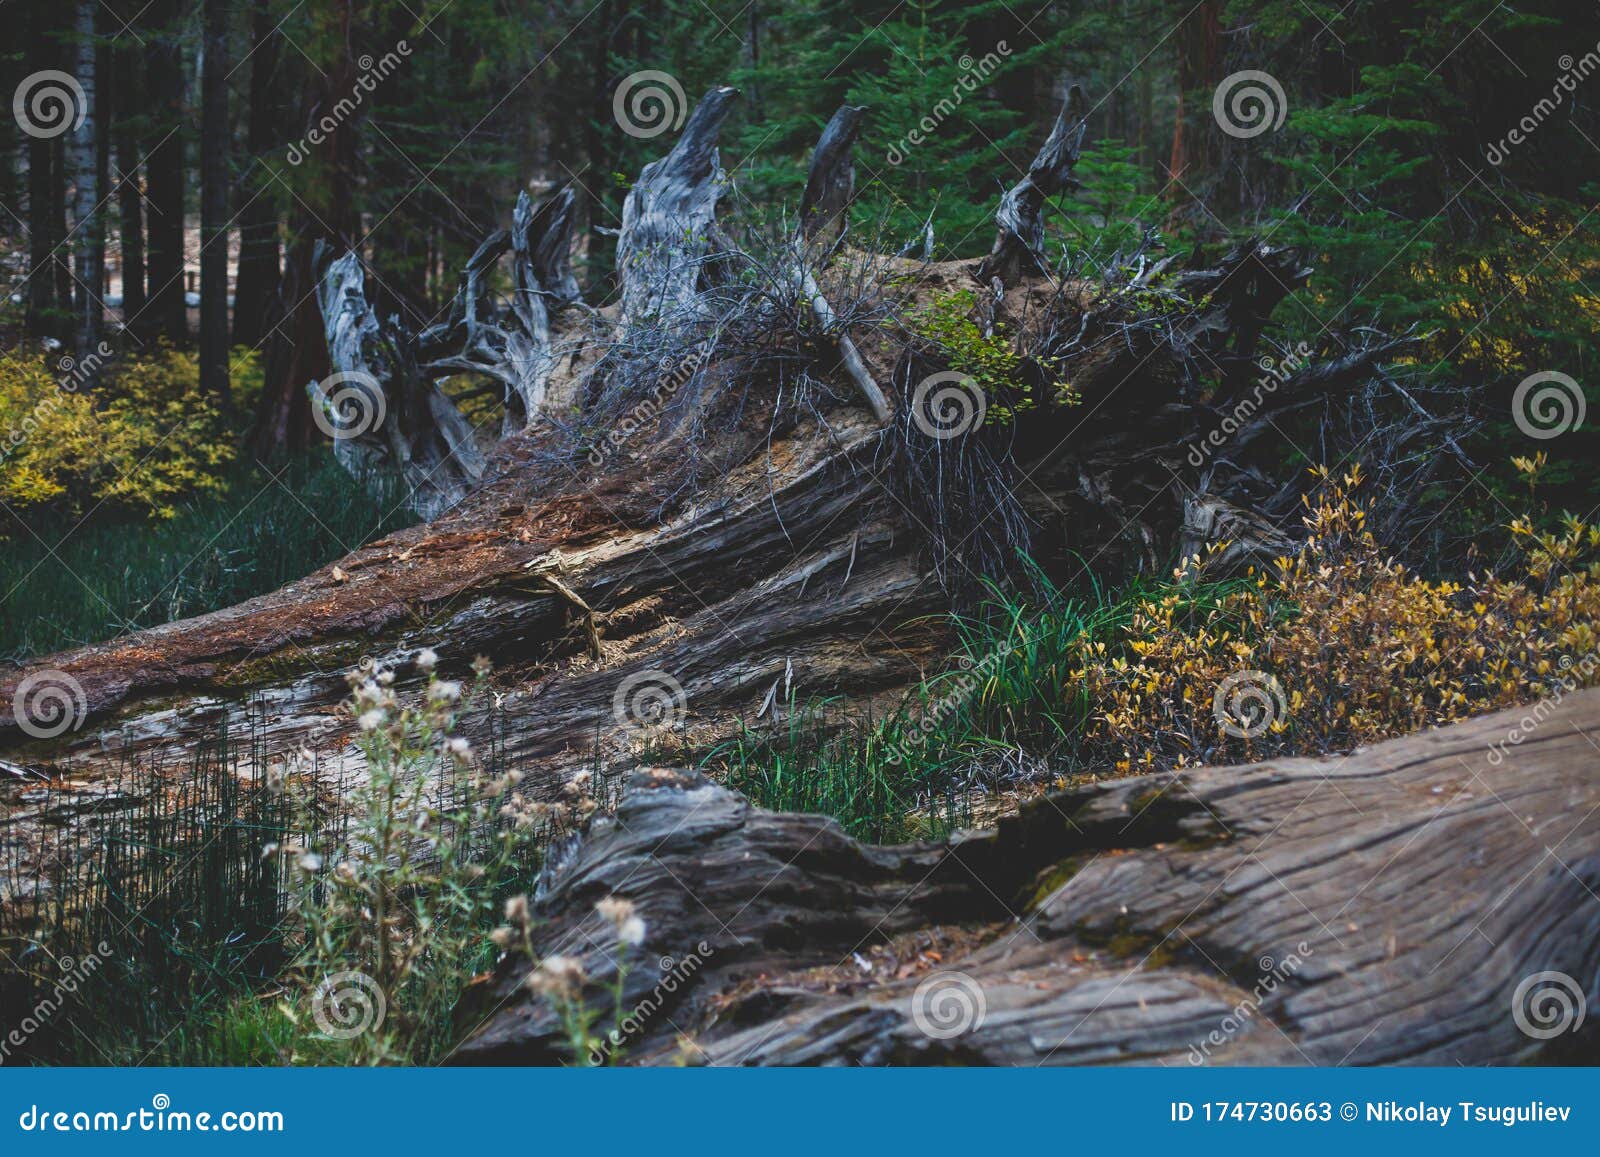 view of giant redwood sequoia trees in mariposa grove of yosemite national park, sierra nevada, wawona, california, united states